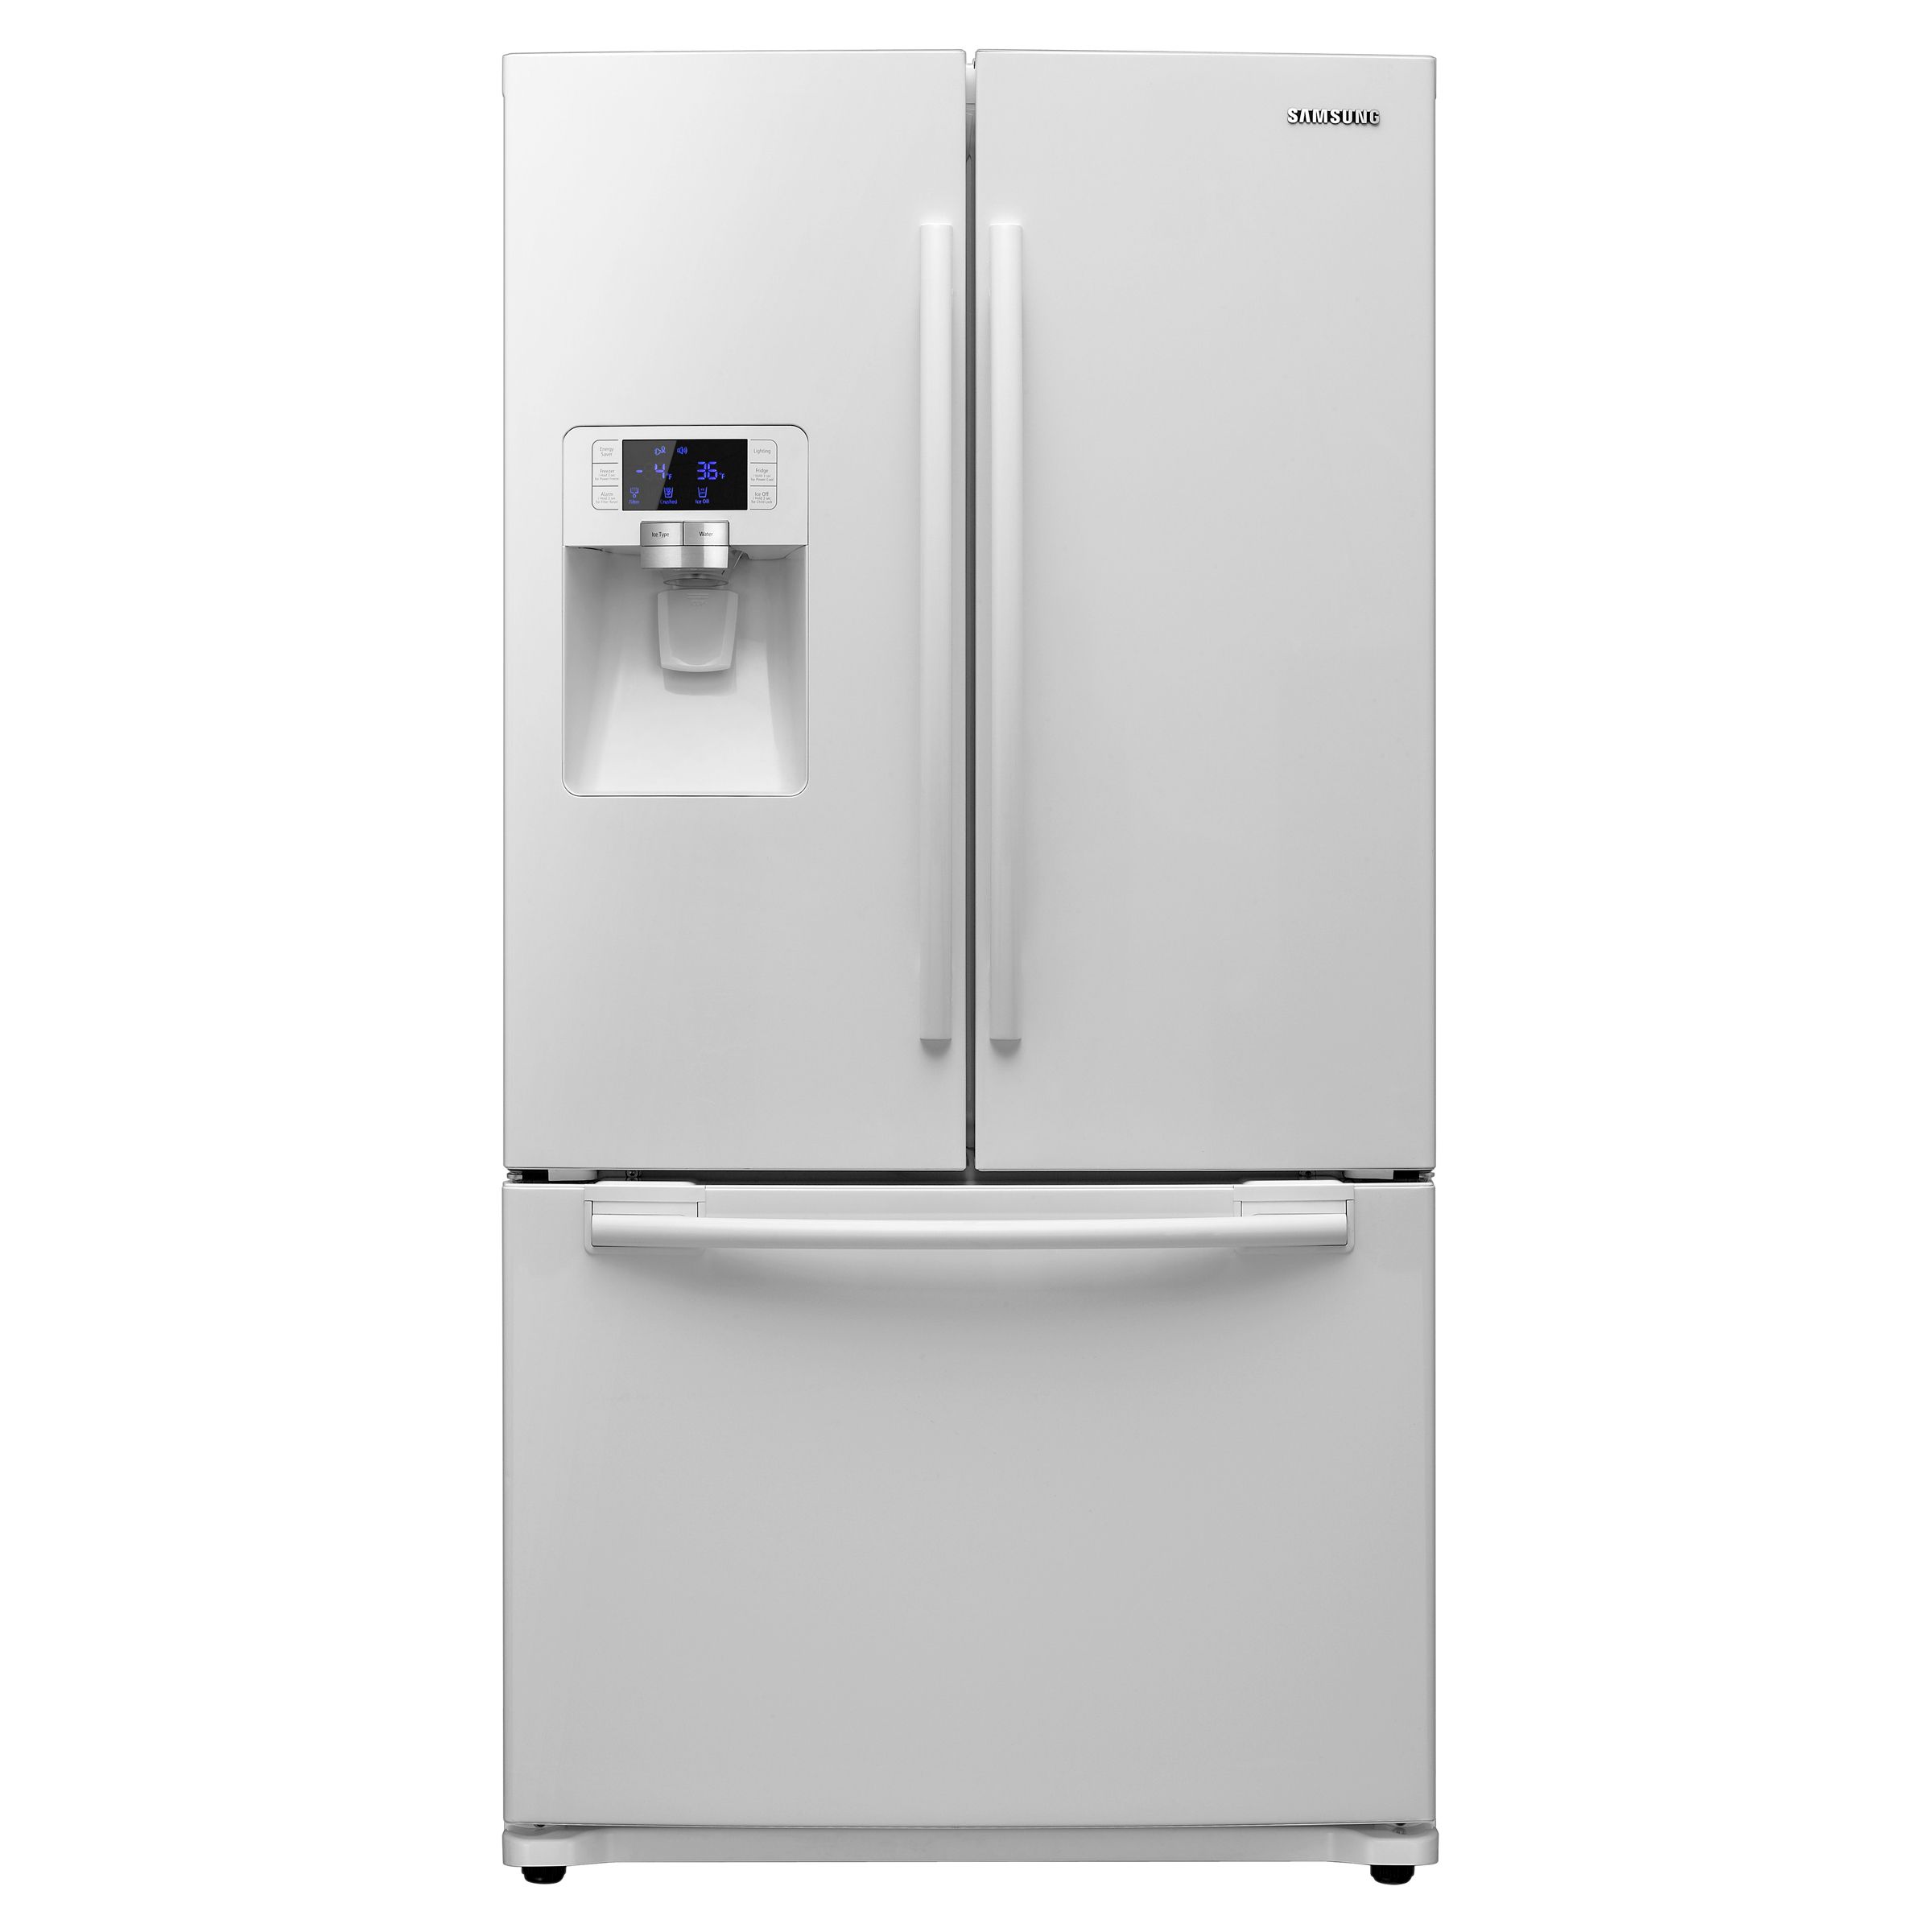 Samsung 29.0 cu. ft. French-Door Refrigerator w/ Premium External Water & Ice Dispenser (RFG297AAWP)